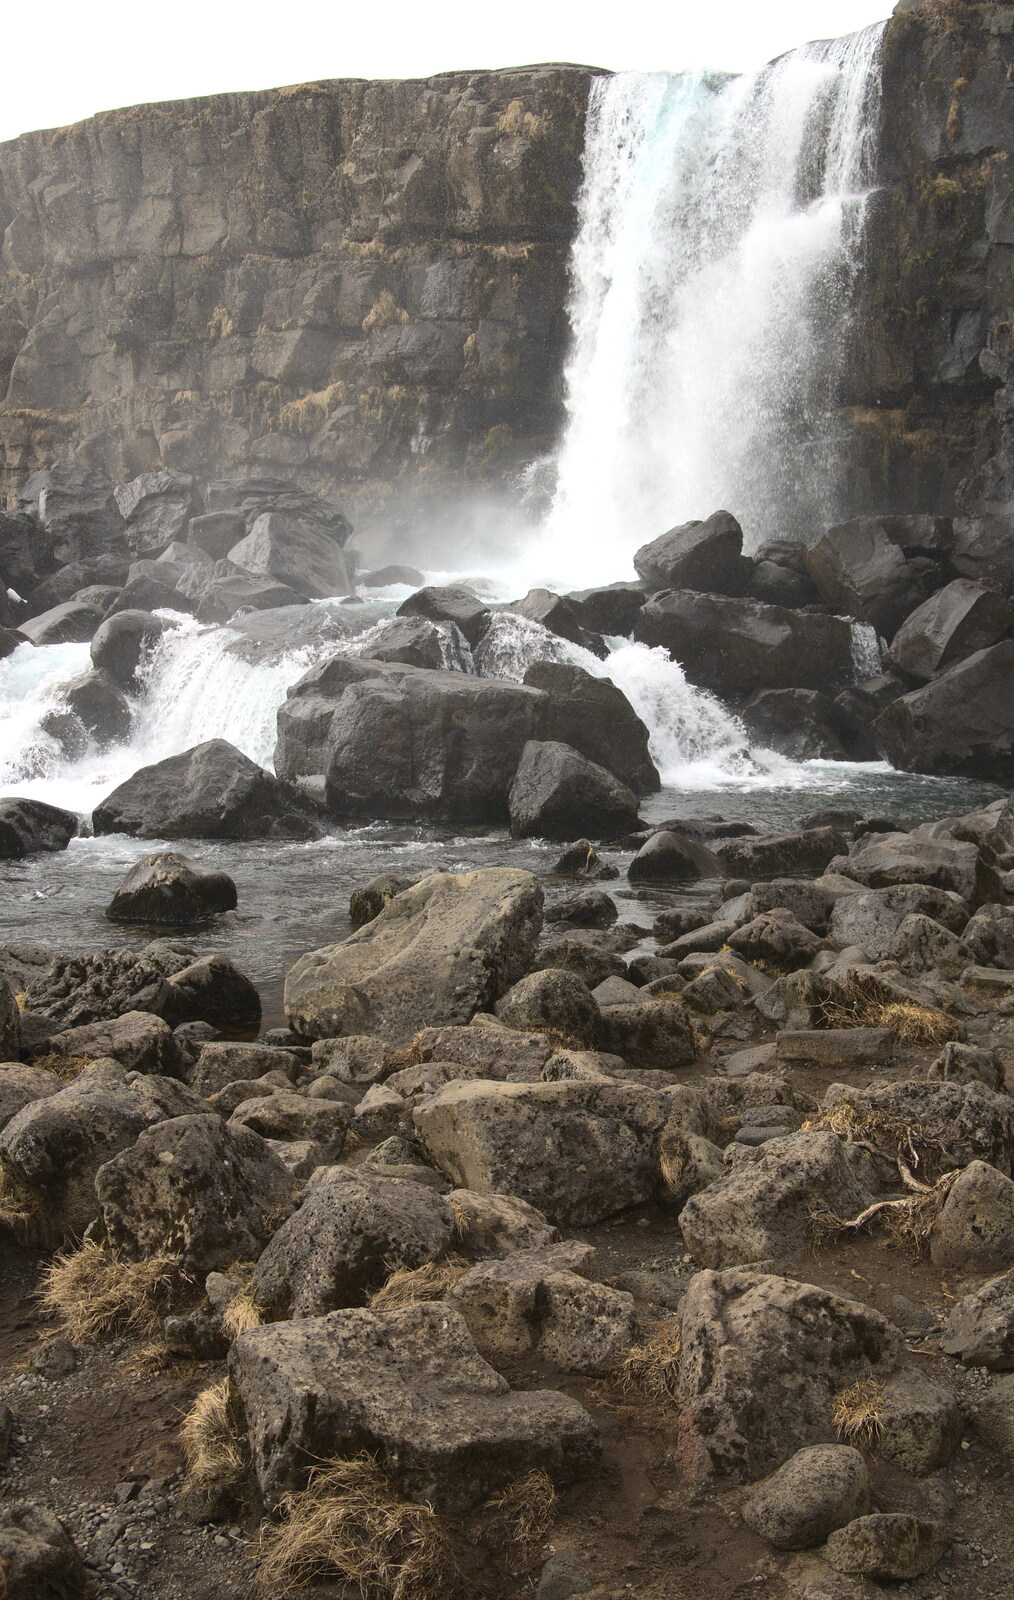 The waterfall at Þingvellir National Park from The Golden Circle of Ísland, Iceland - 22nd April 2017